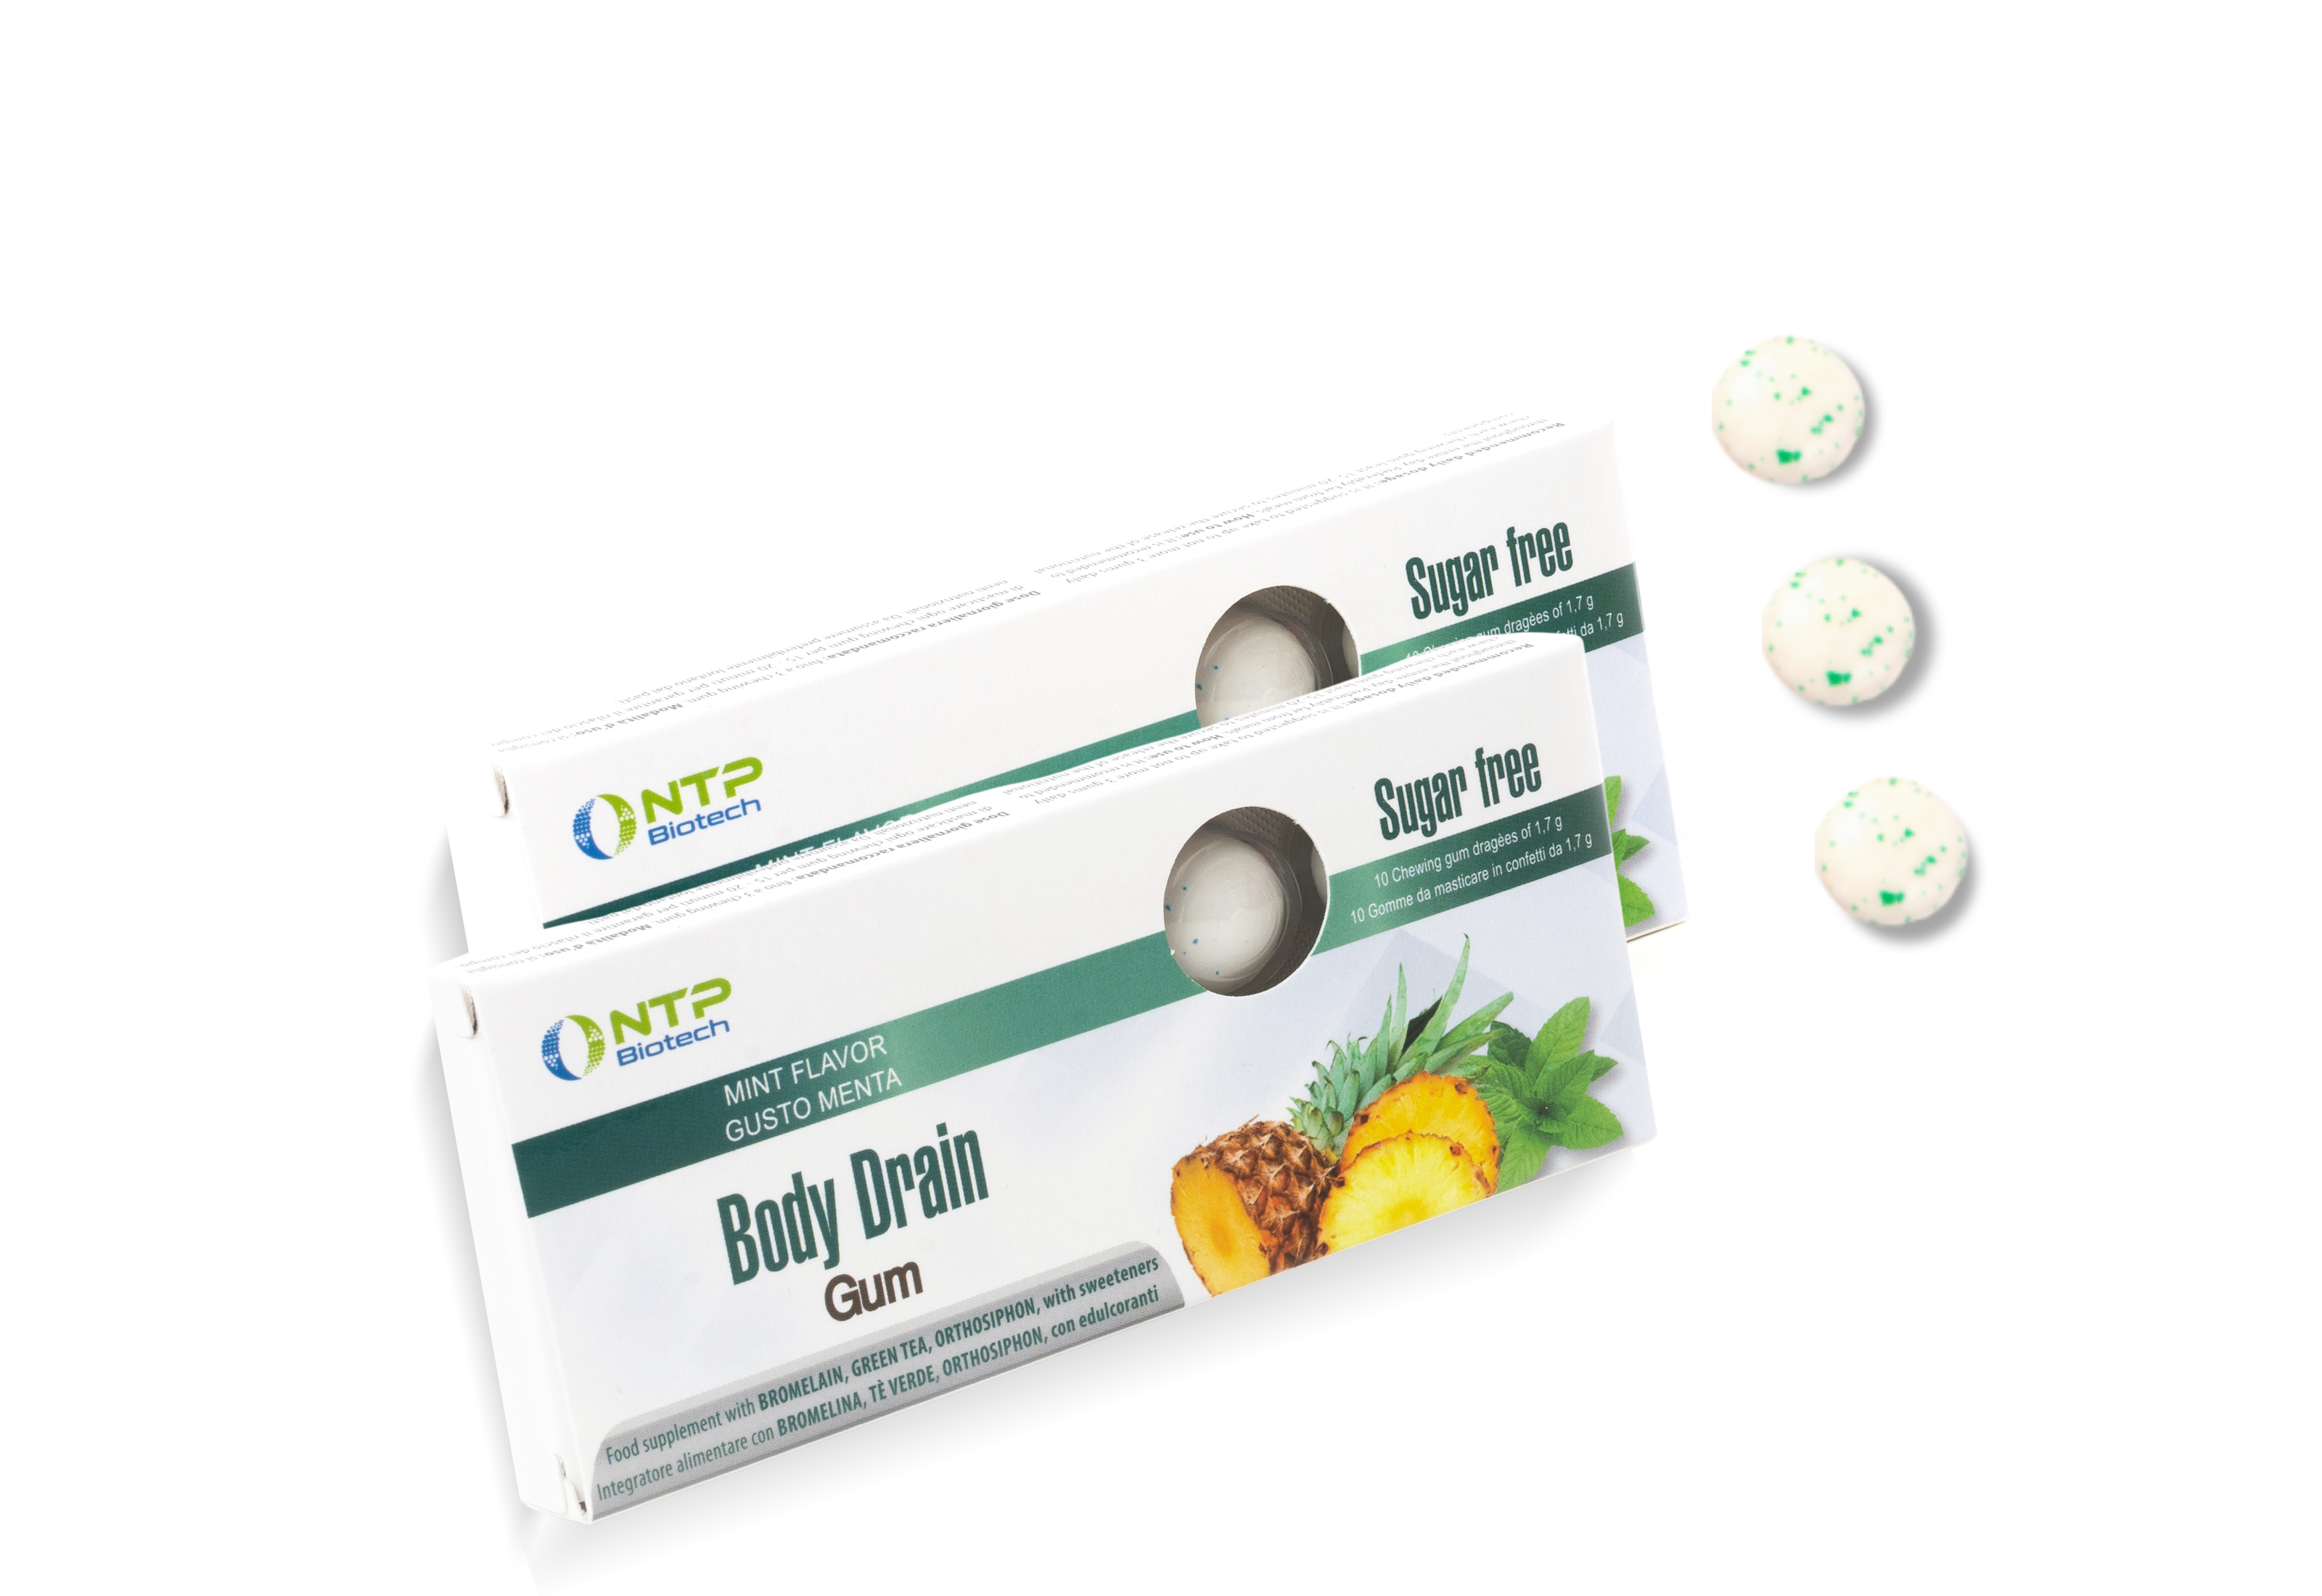 Body Drain Gum Ntp Biotech